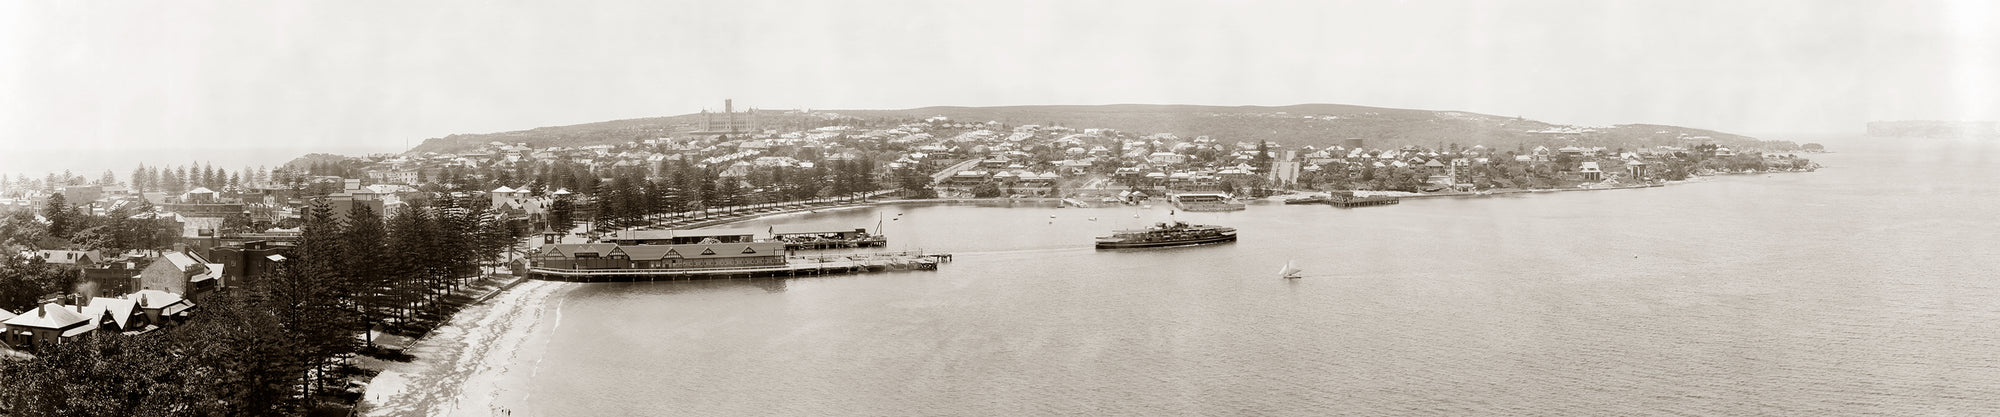 Manly Ferry Wharf, Manly NSW Australia 1920s